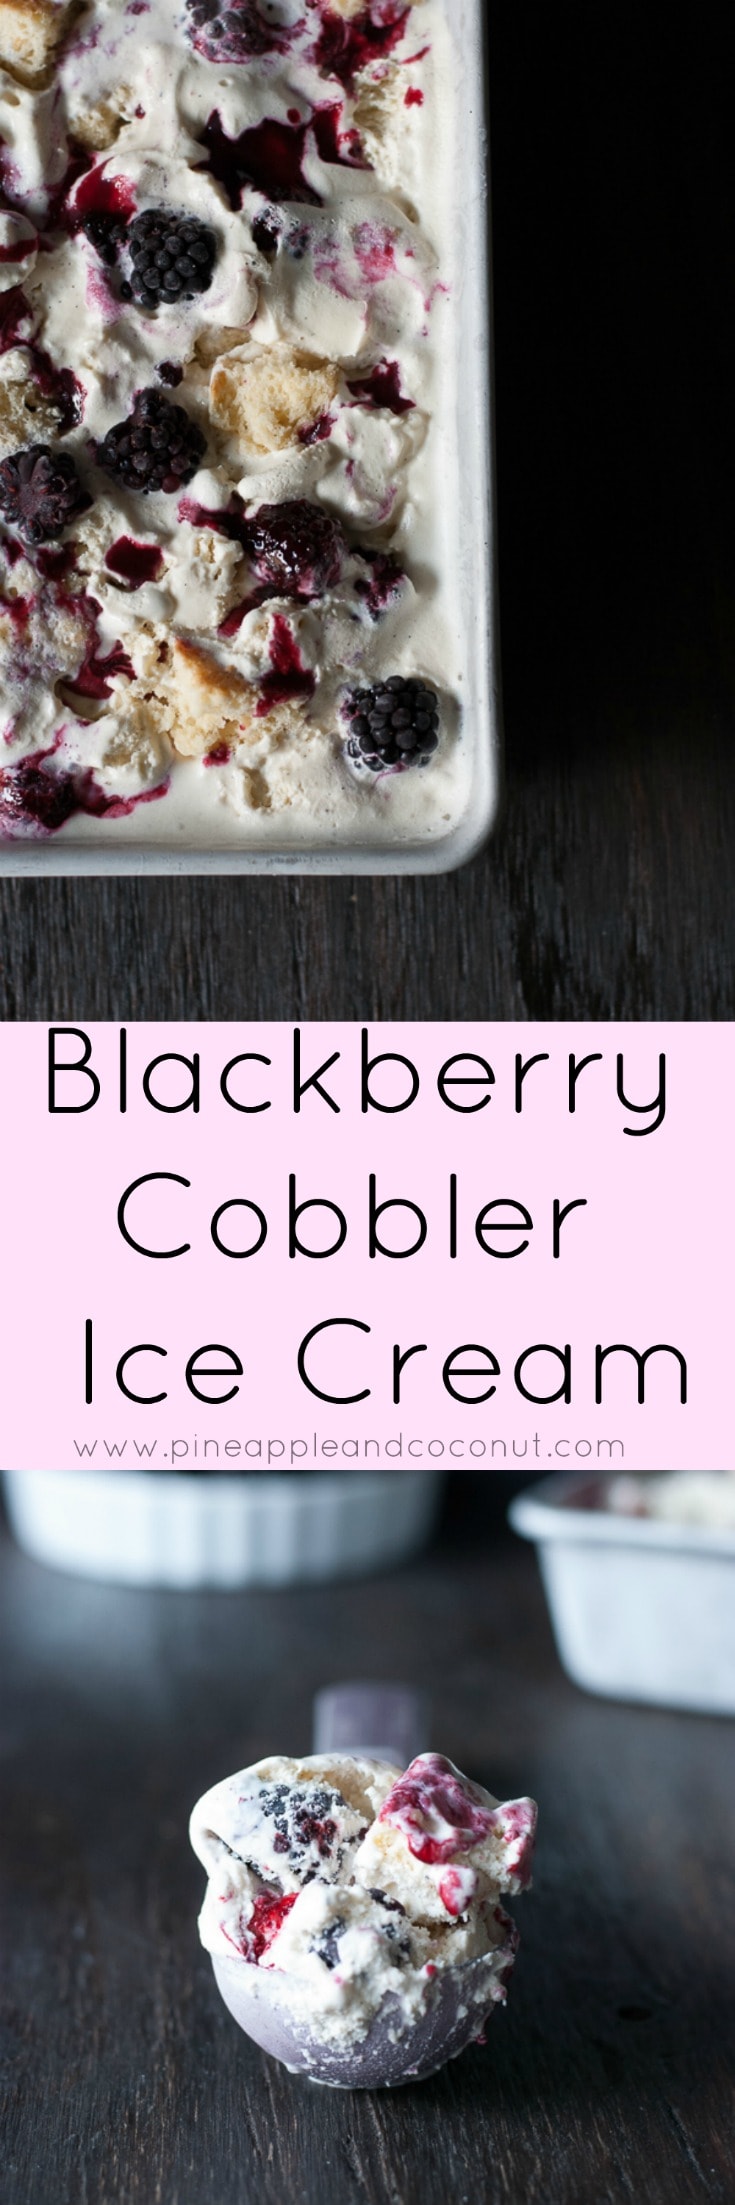 Blackberry Cobbler Ice Cream Collage